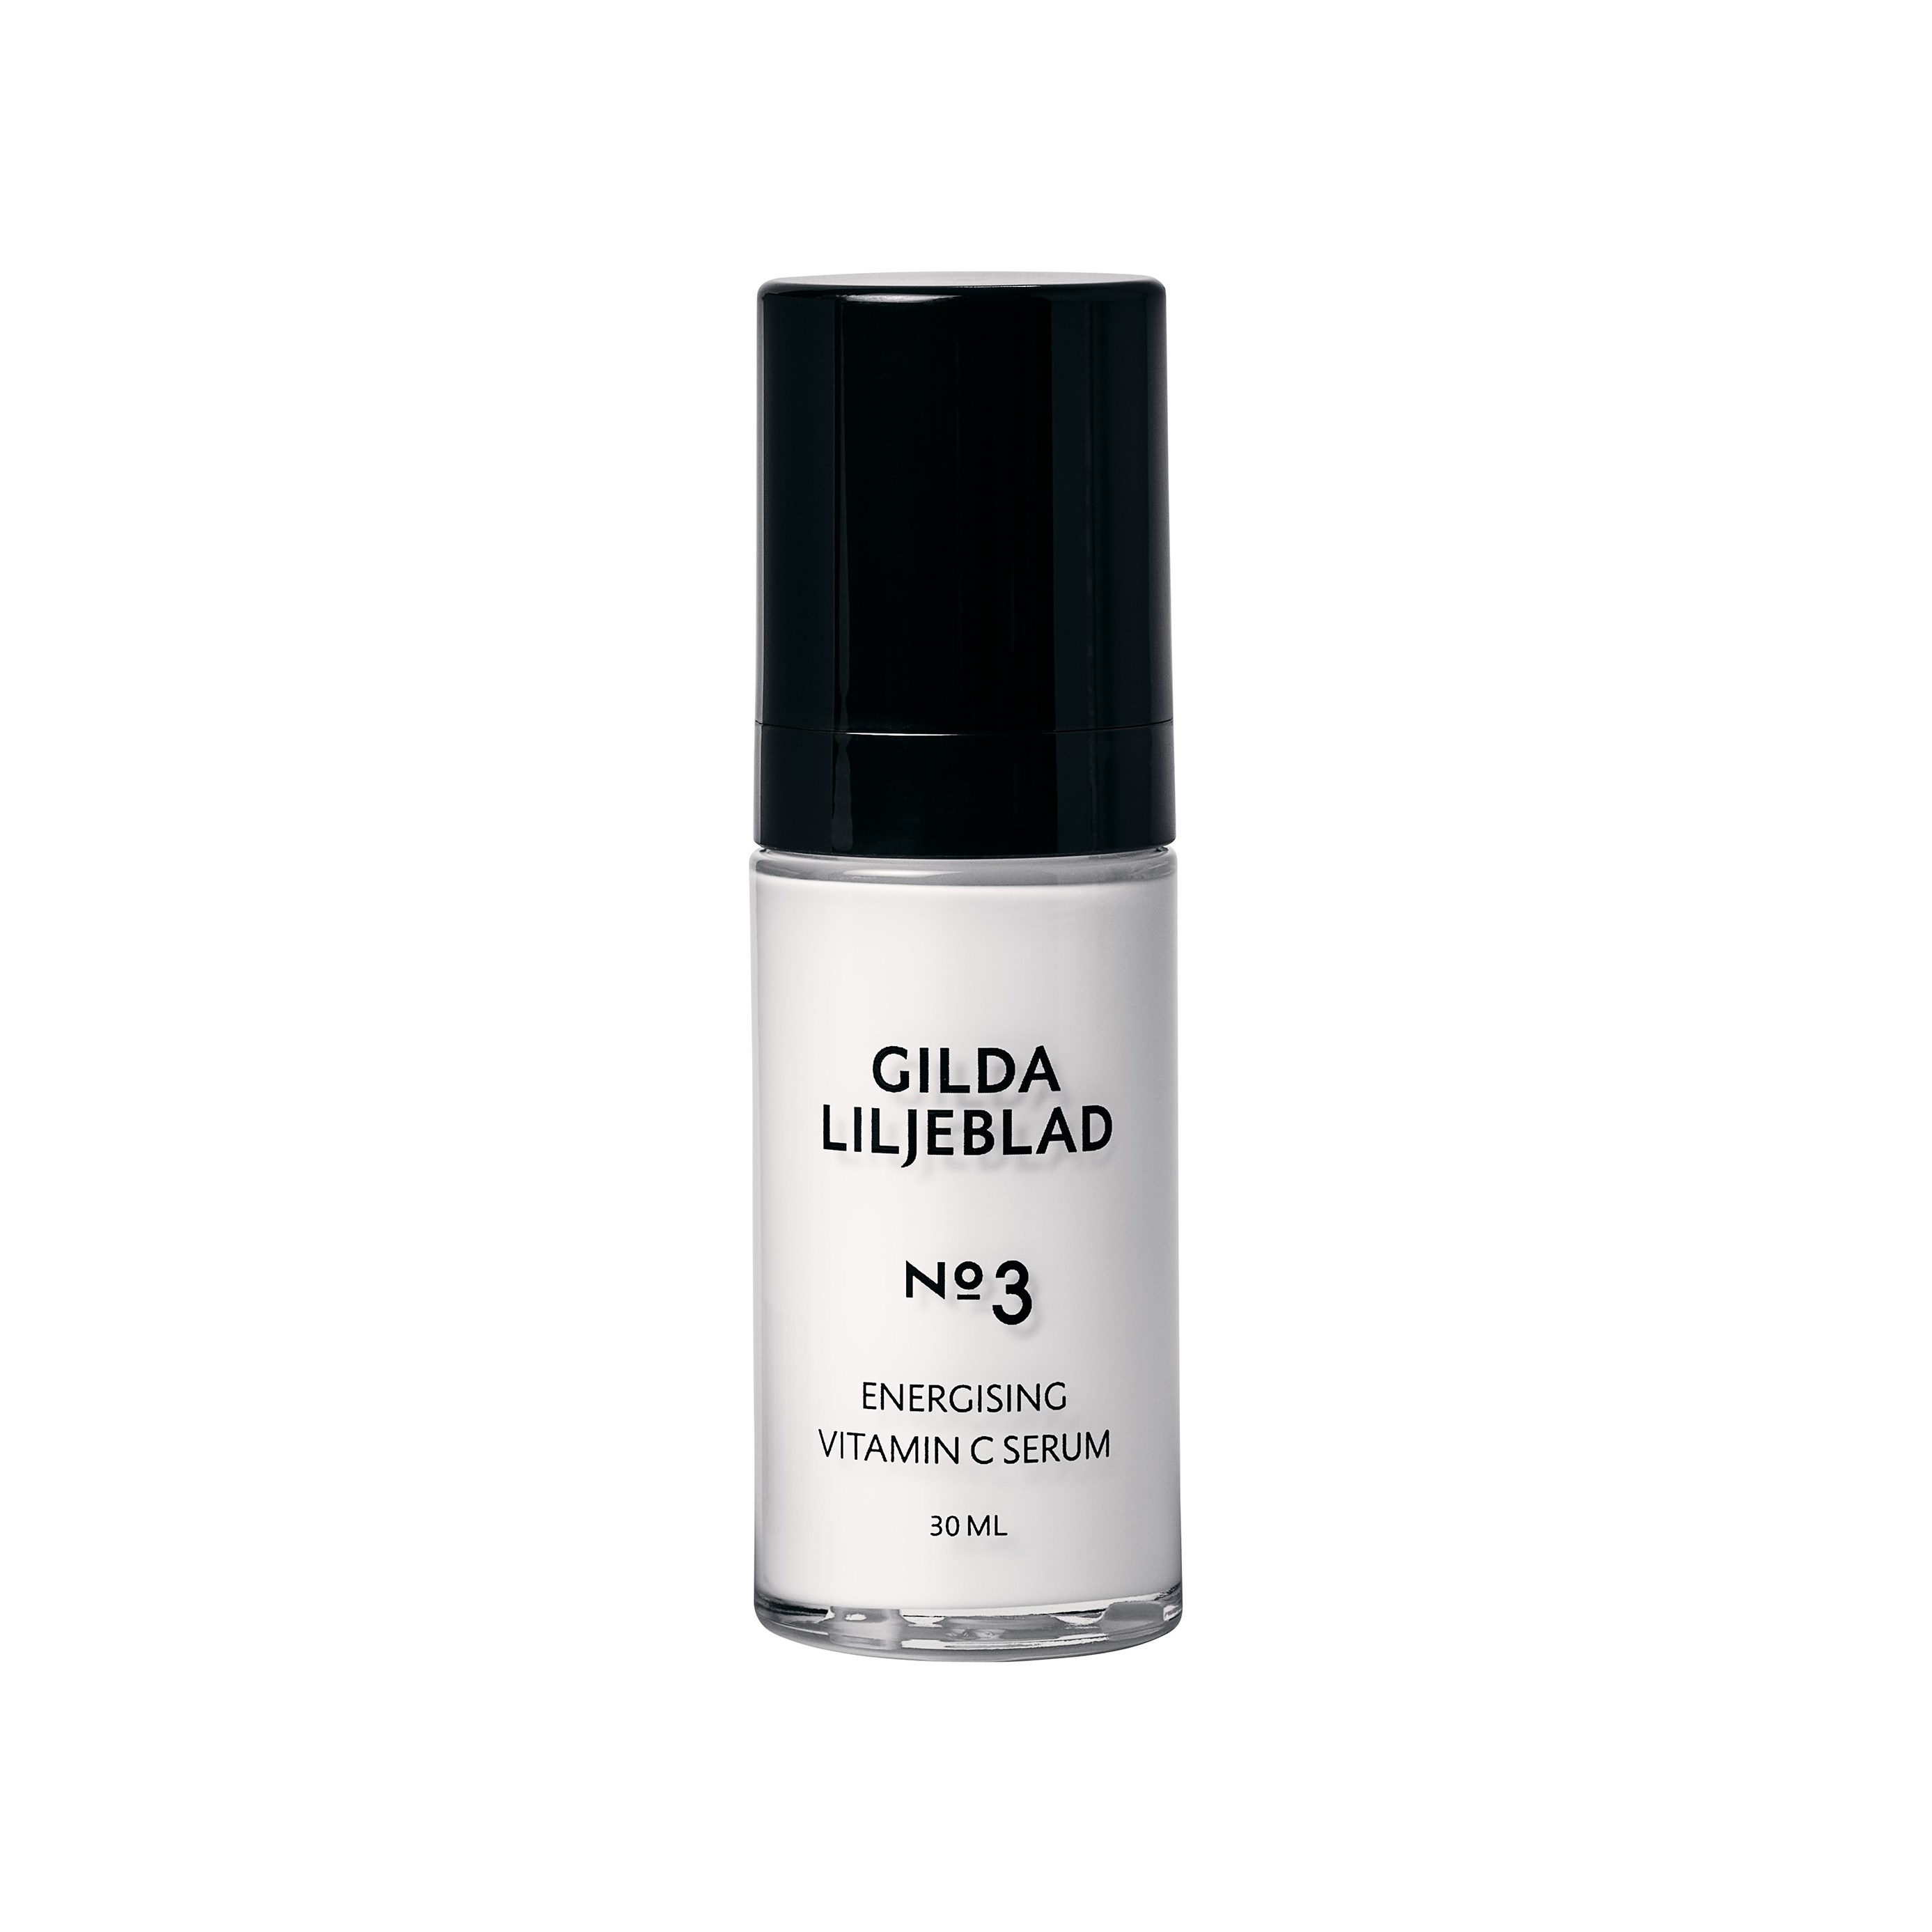 Gilda Liljeblad Energising Vitamin C Serum 30 ml